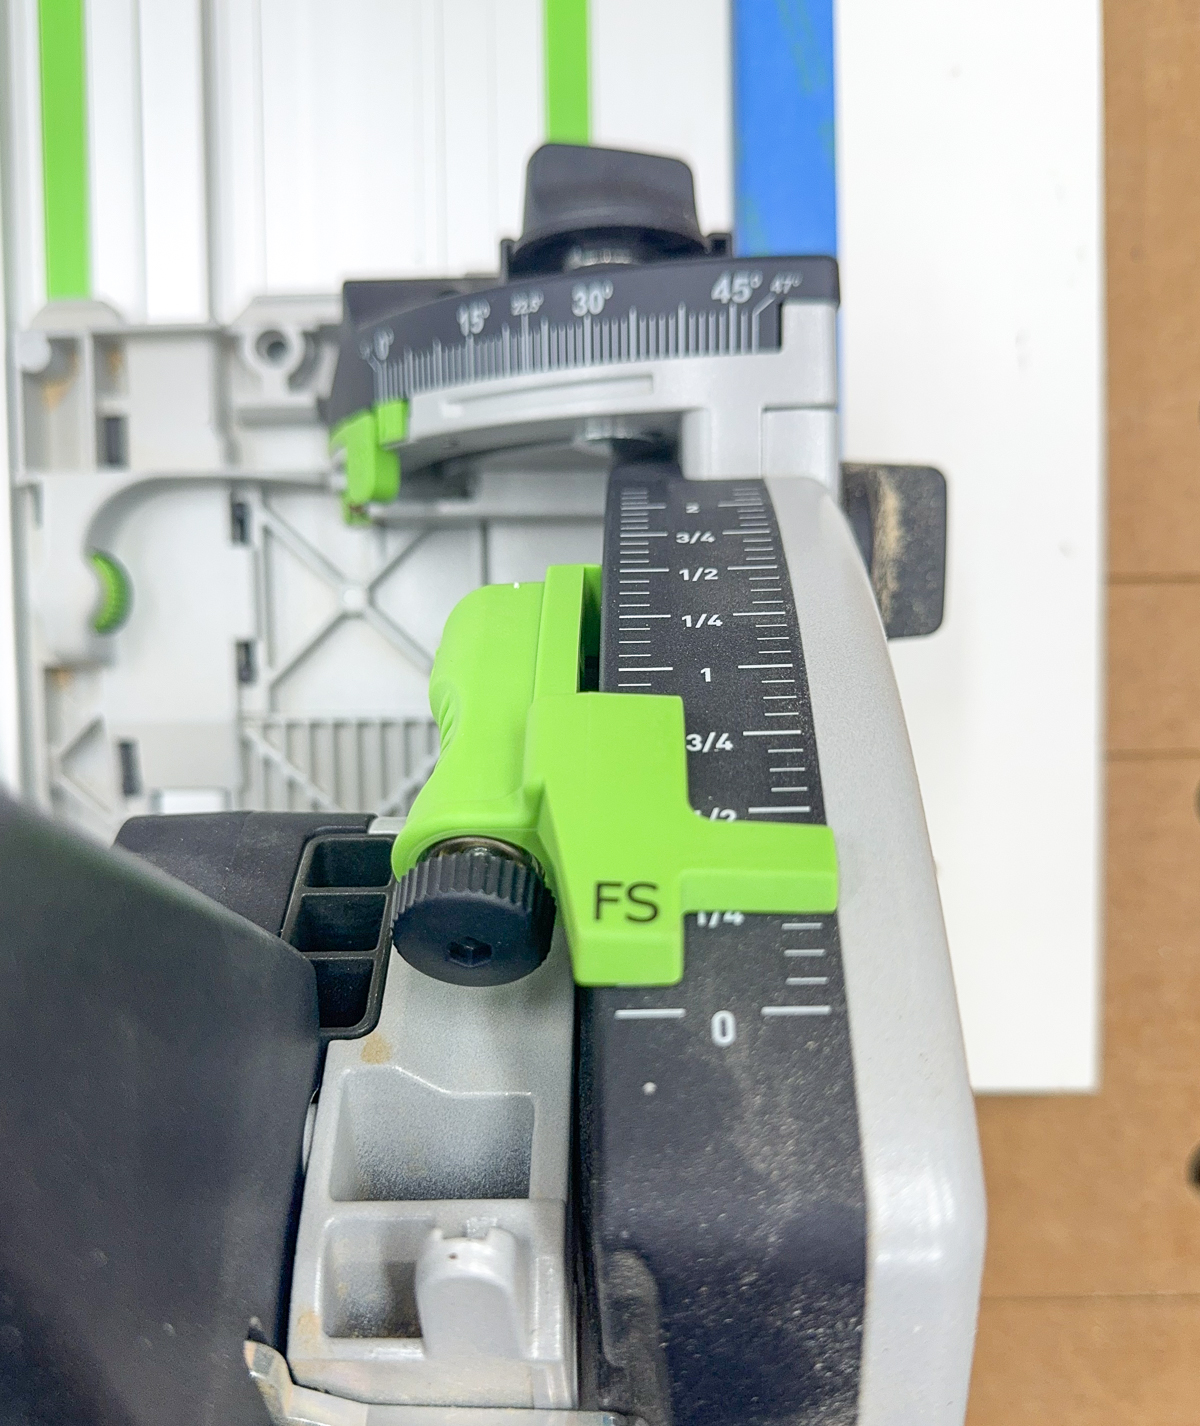 Festool track saw blade height set for a scoring cut